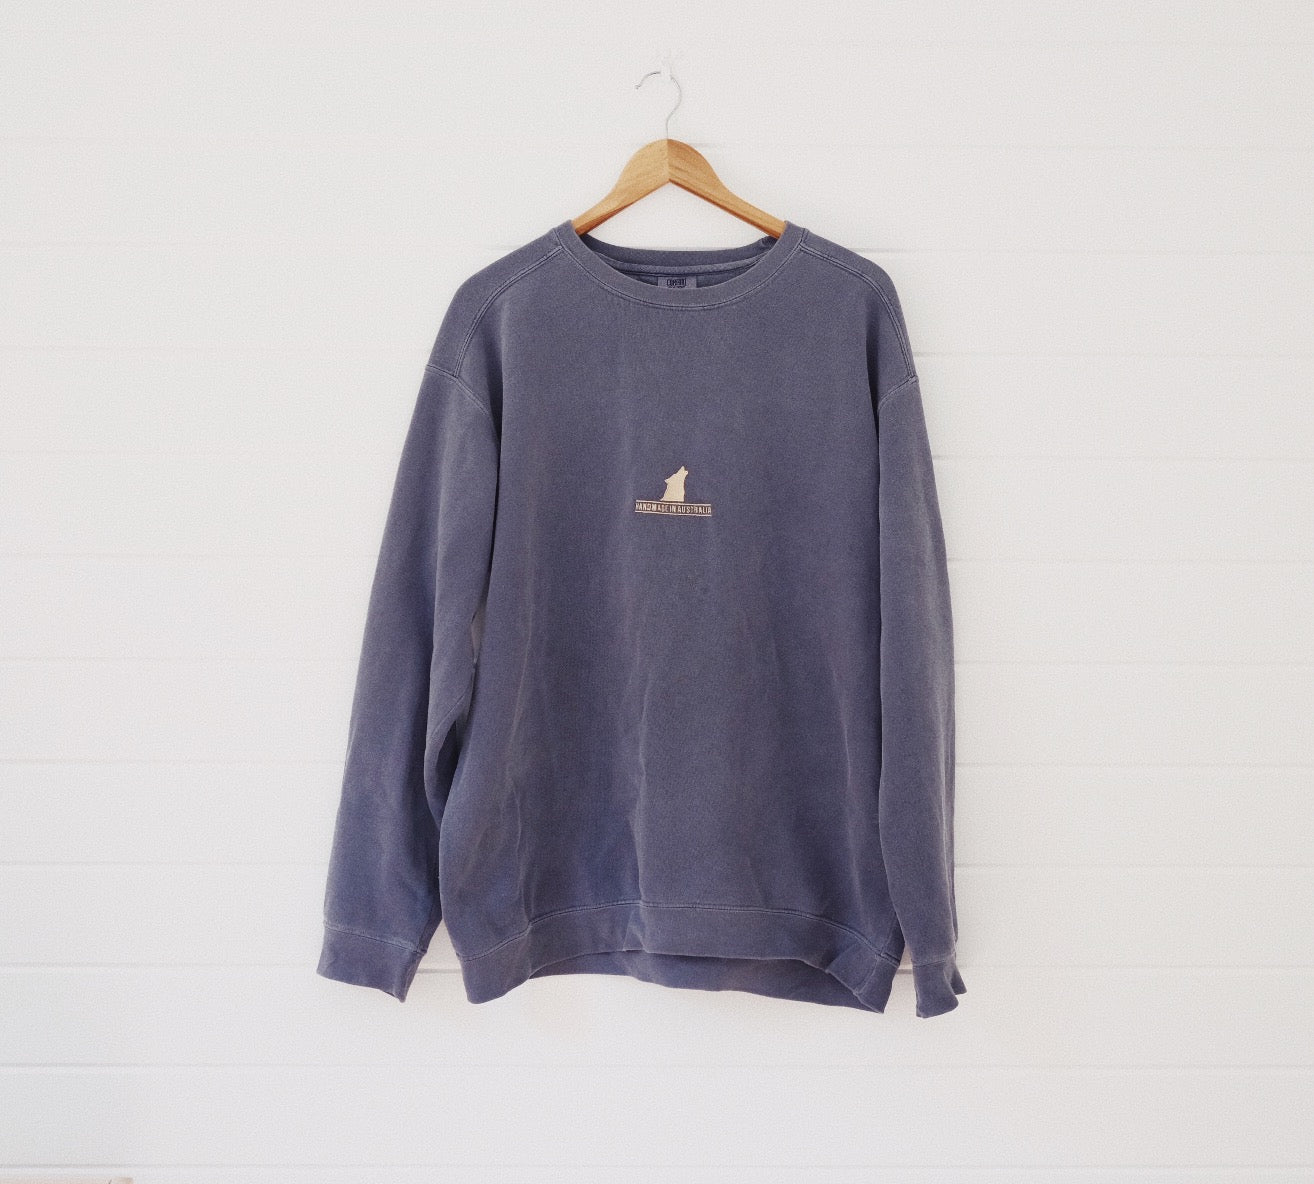 Handmade In Australia Sweater